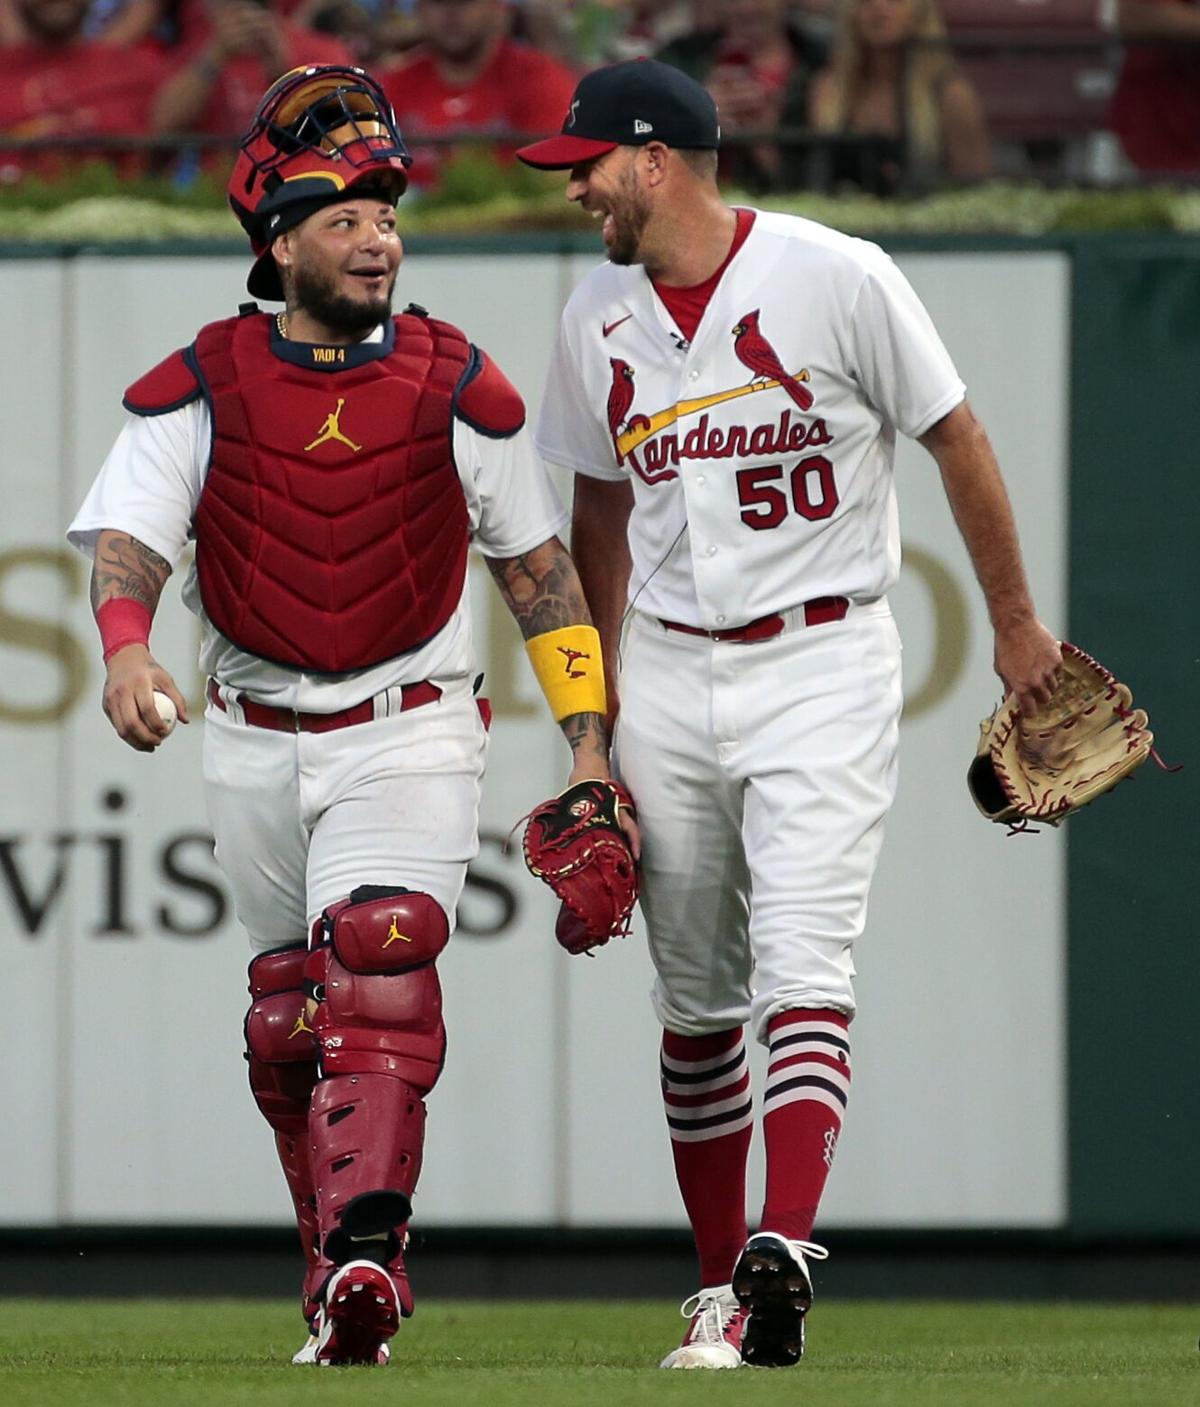 Quick Hits: Tyler O'Neill's homer shatters tie, hoists Cardinals